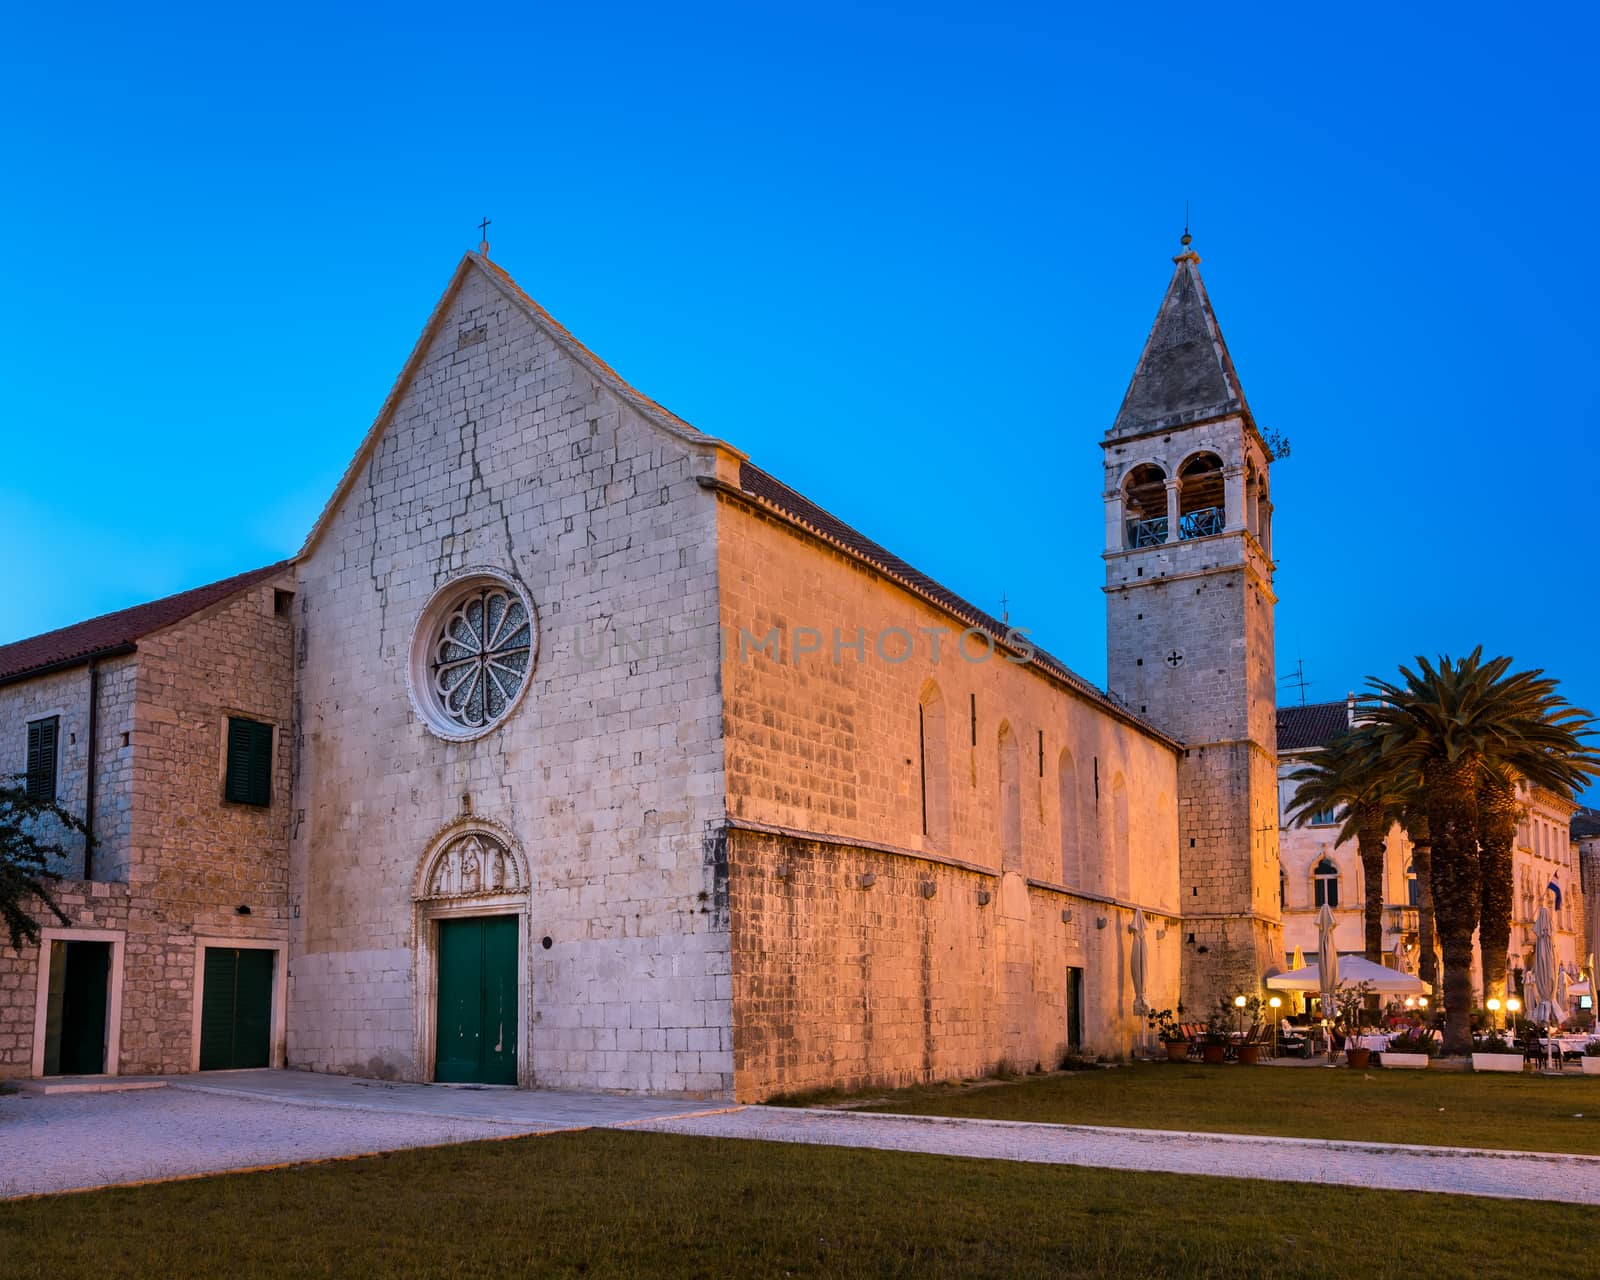 Illuminated Church of Saint Dominic in Trogir at Night, Croatia by anshar